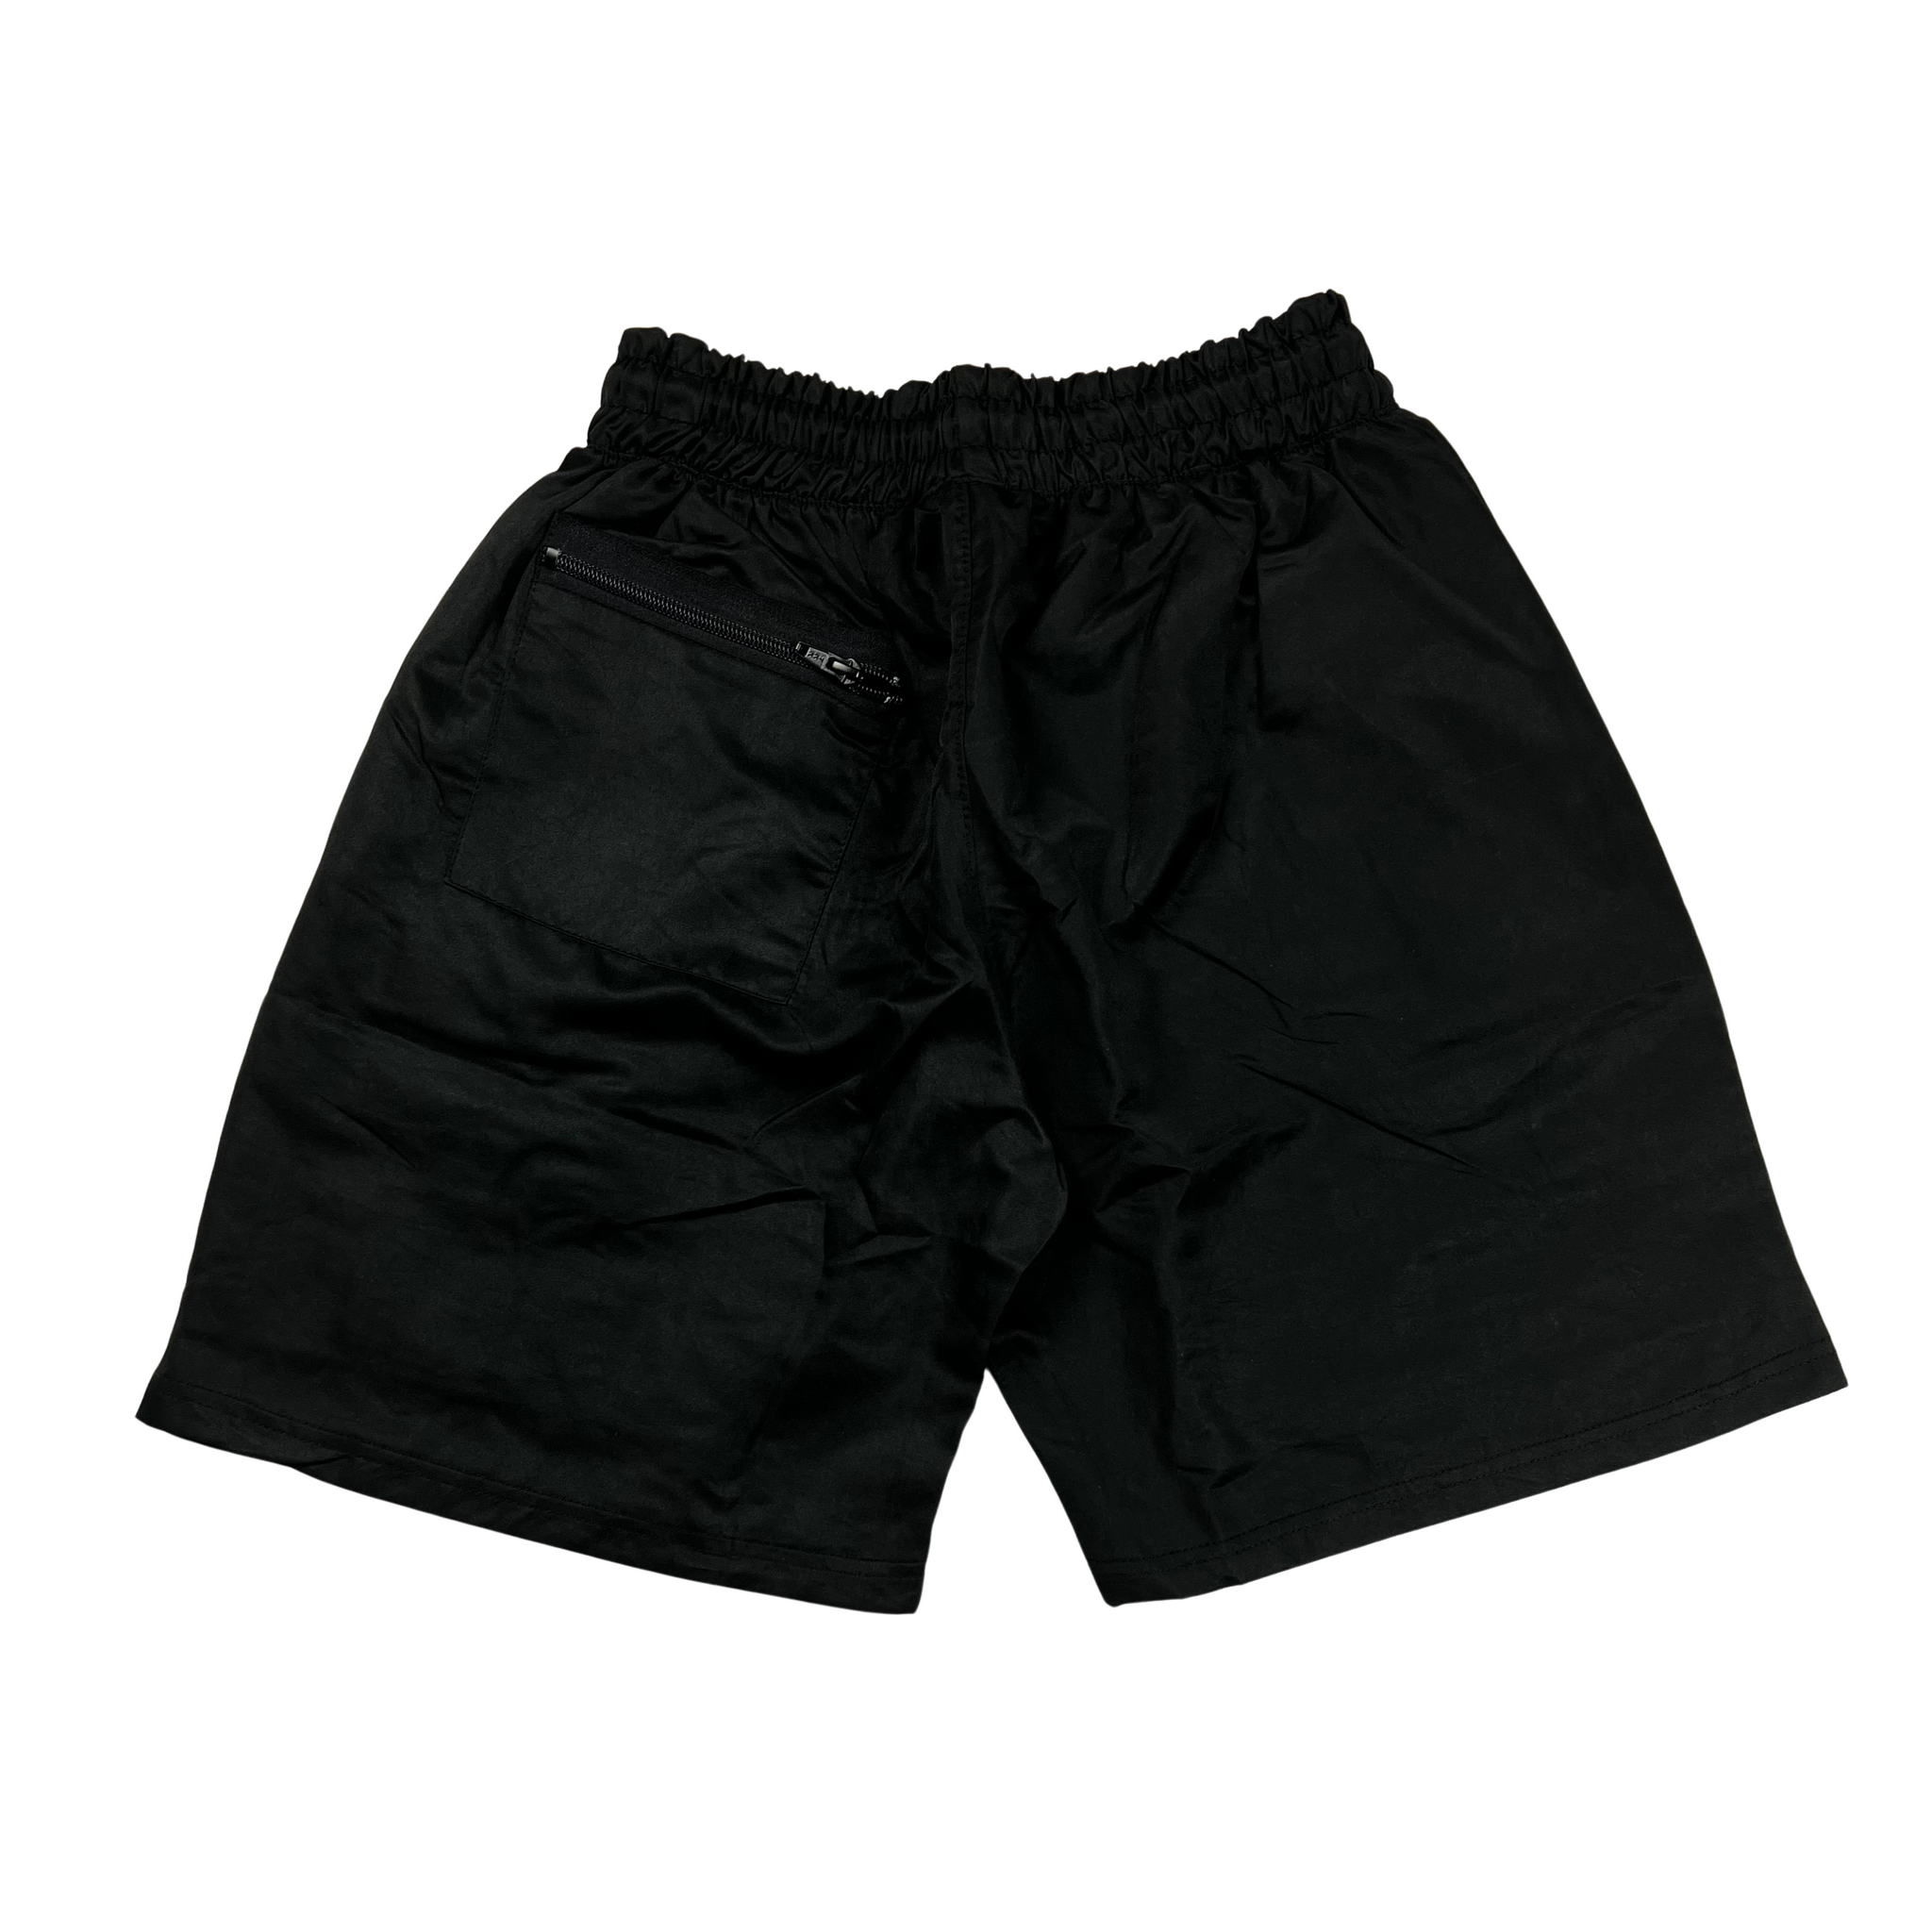 Black Rich Nylon Shorts Luxe